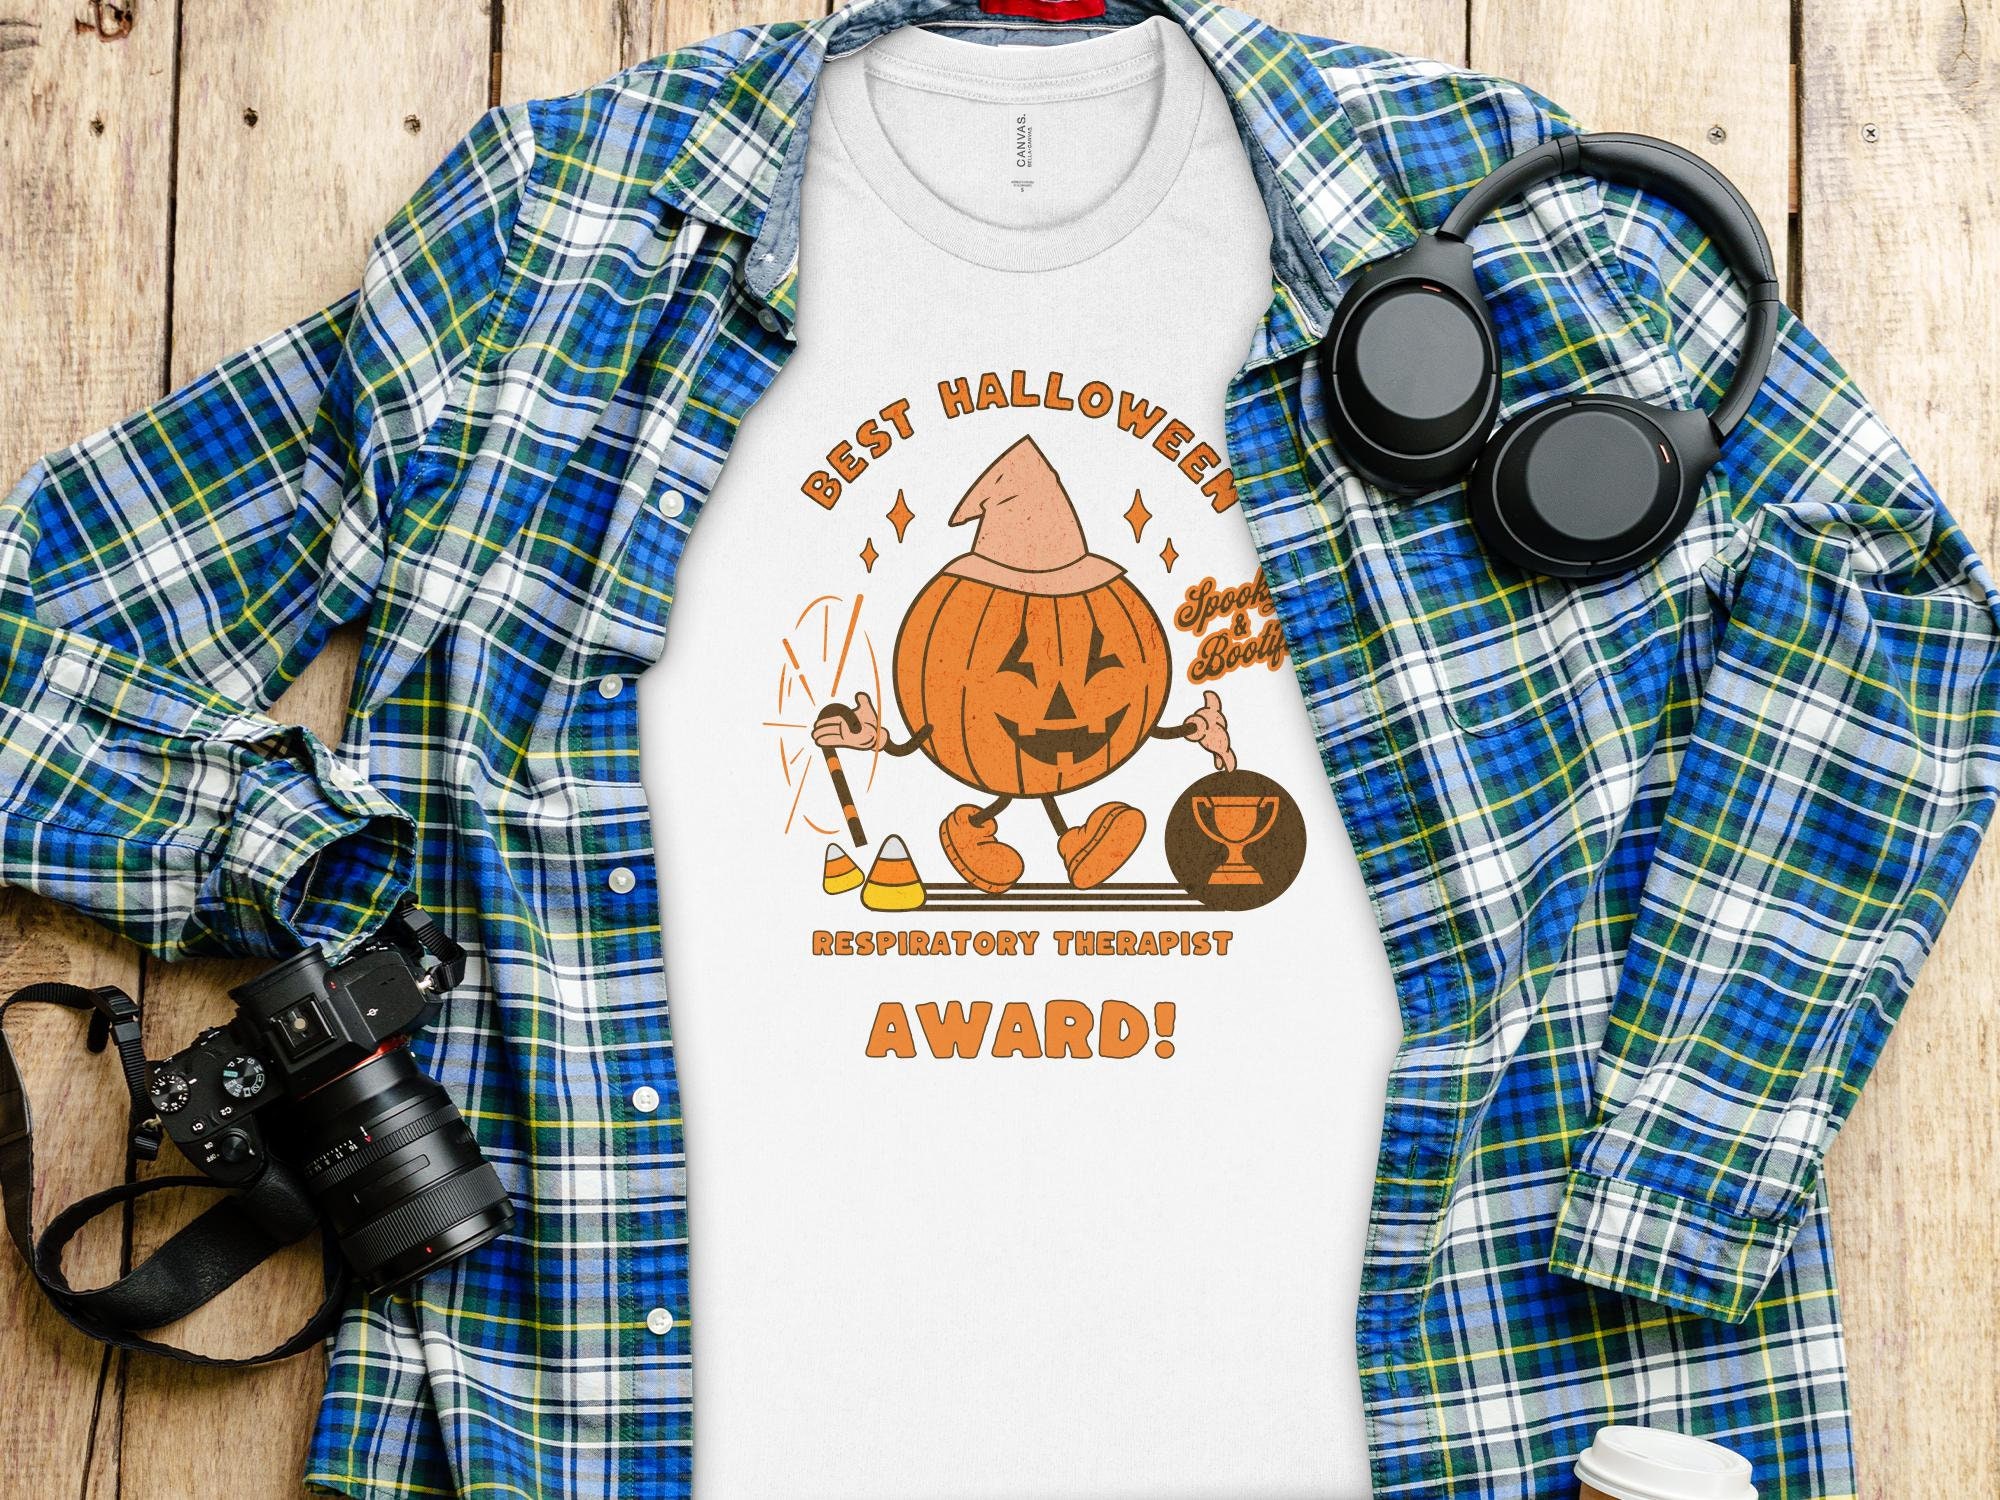 Discover Respiratory Therapist Halloween Award T-Shirt Funny Halloween Tee Shirt Halloween Gift Idea Doctor Nurse Practitioner Halloween Shirts